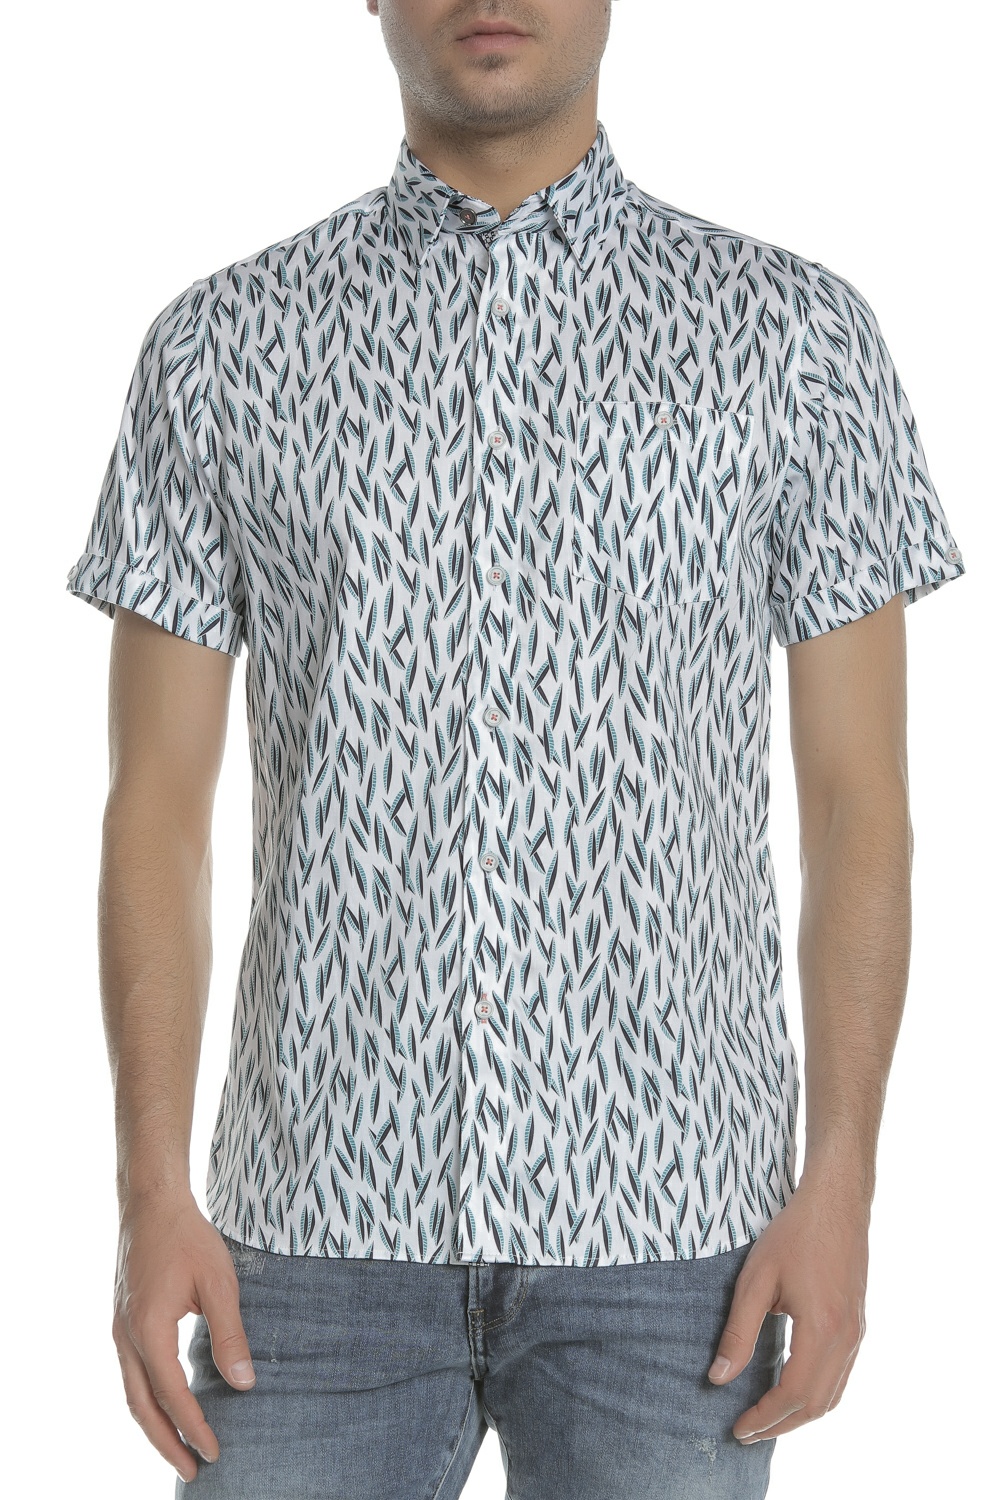 TED BAKER Ανδρικό κοντομάνικο πουκάμισο TED BAKER WOOLRUS λευκό-μπλε